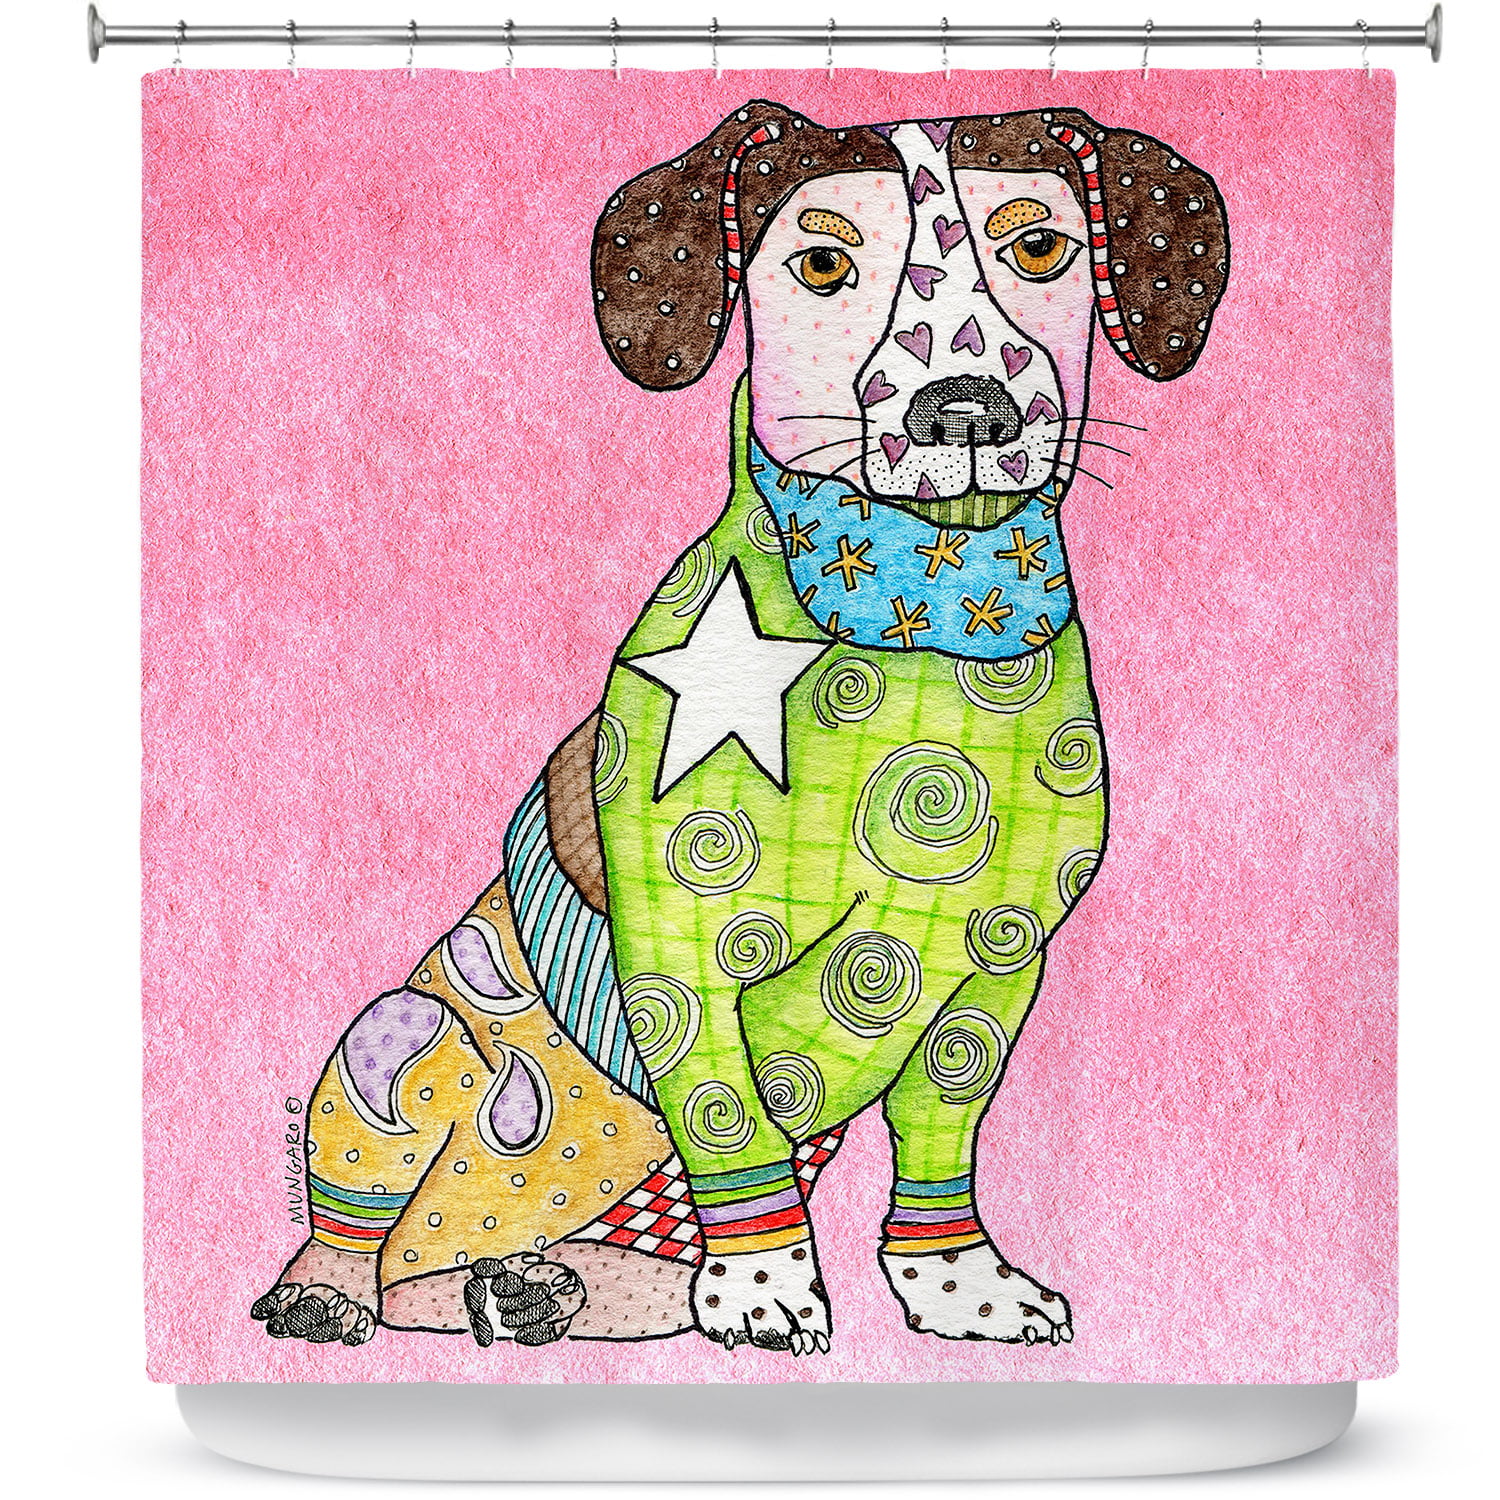 Dia Noche Designs Microfiber Duvet Covers Marley Ungaro Yorkie Dog Teal